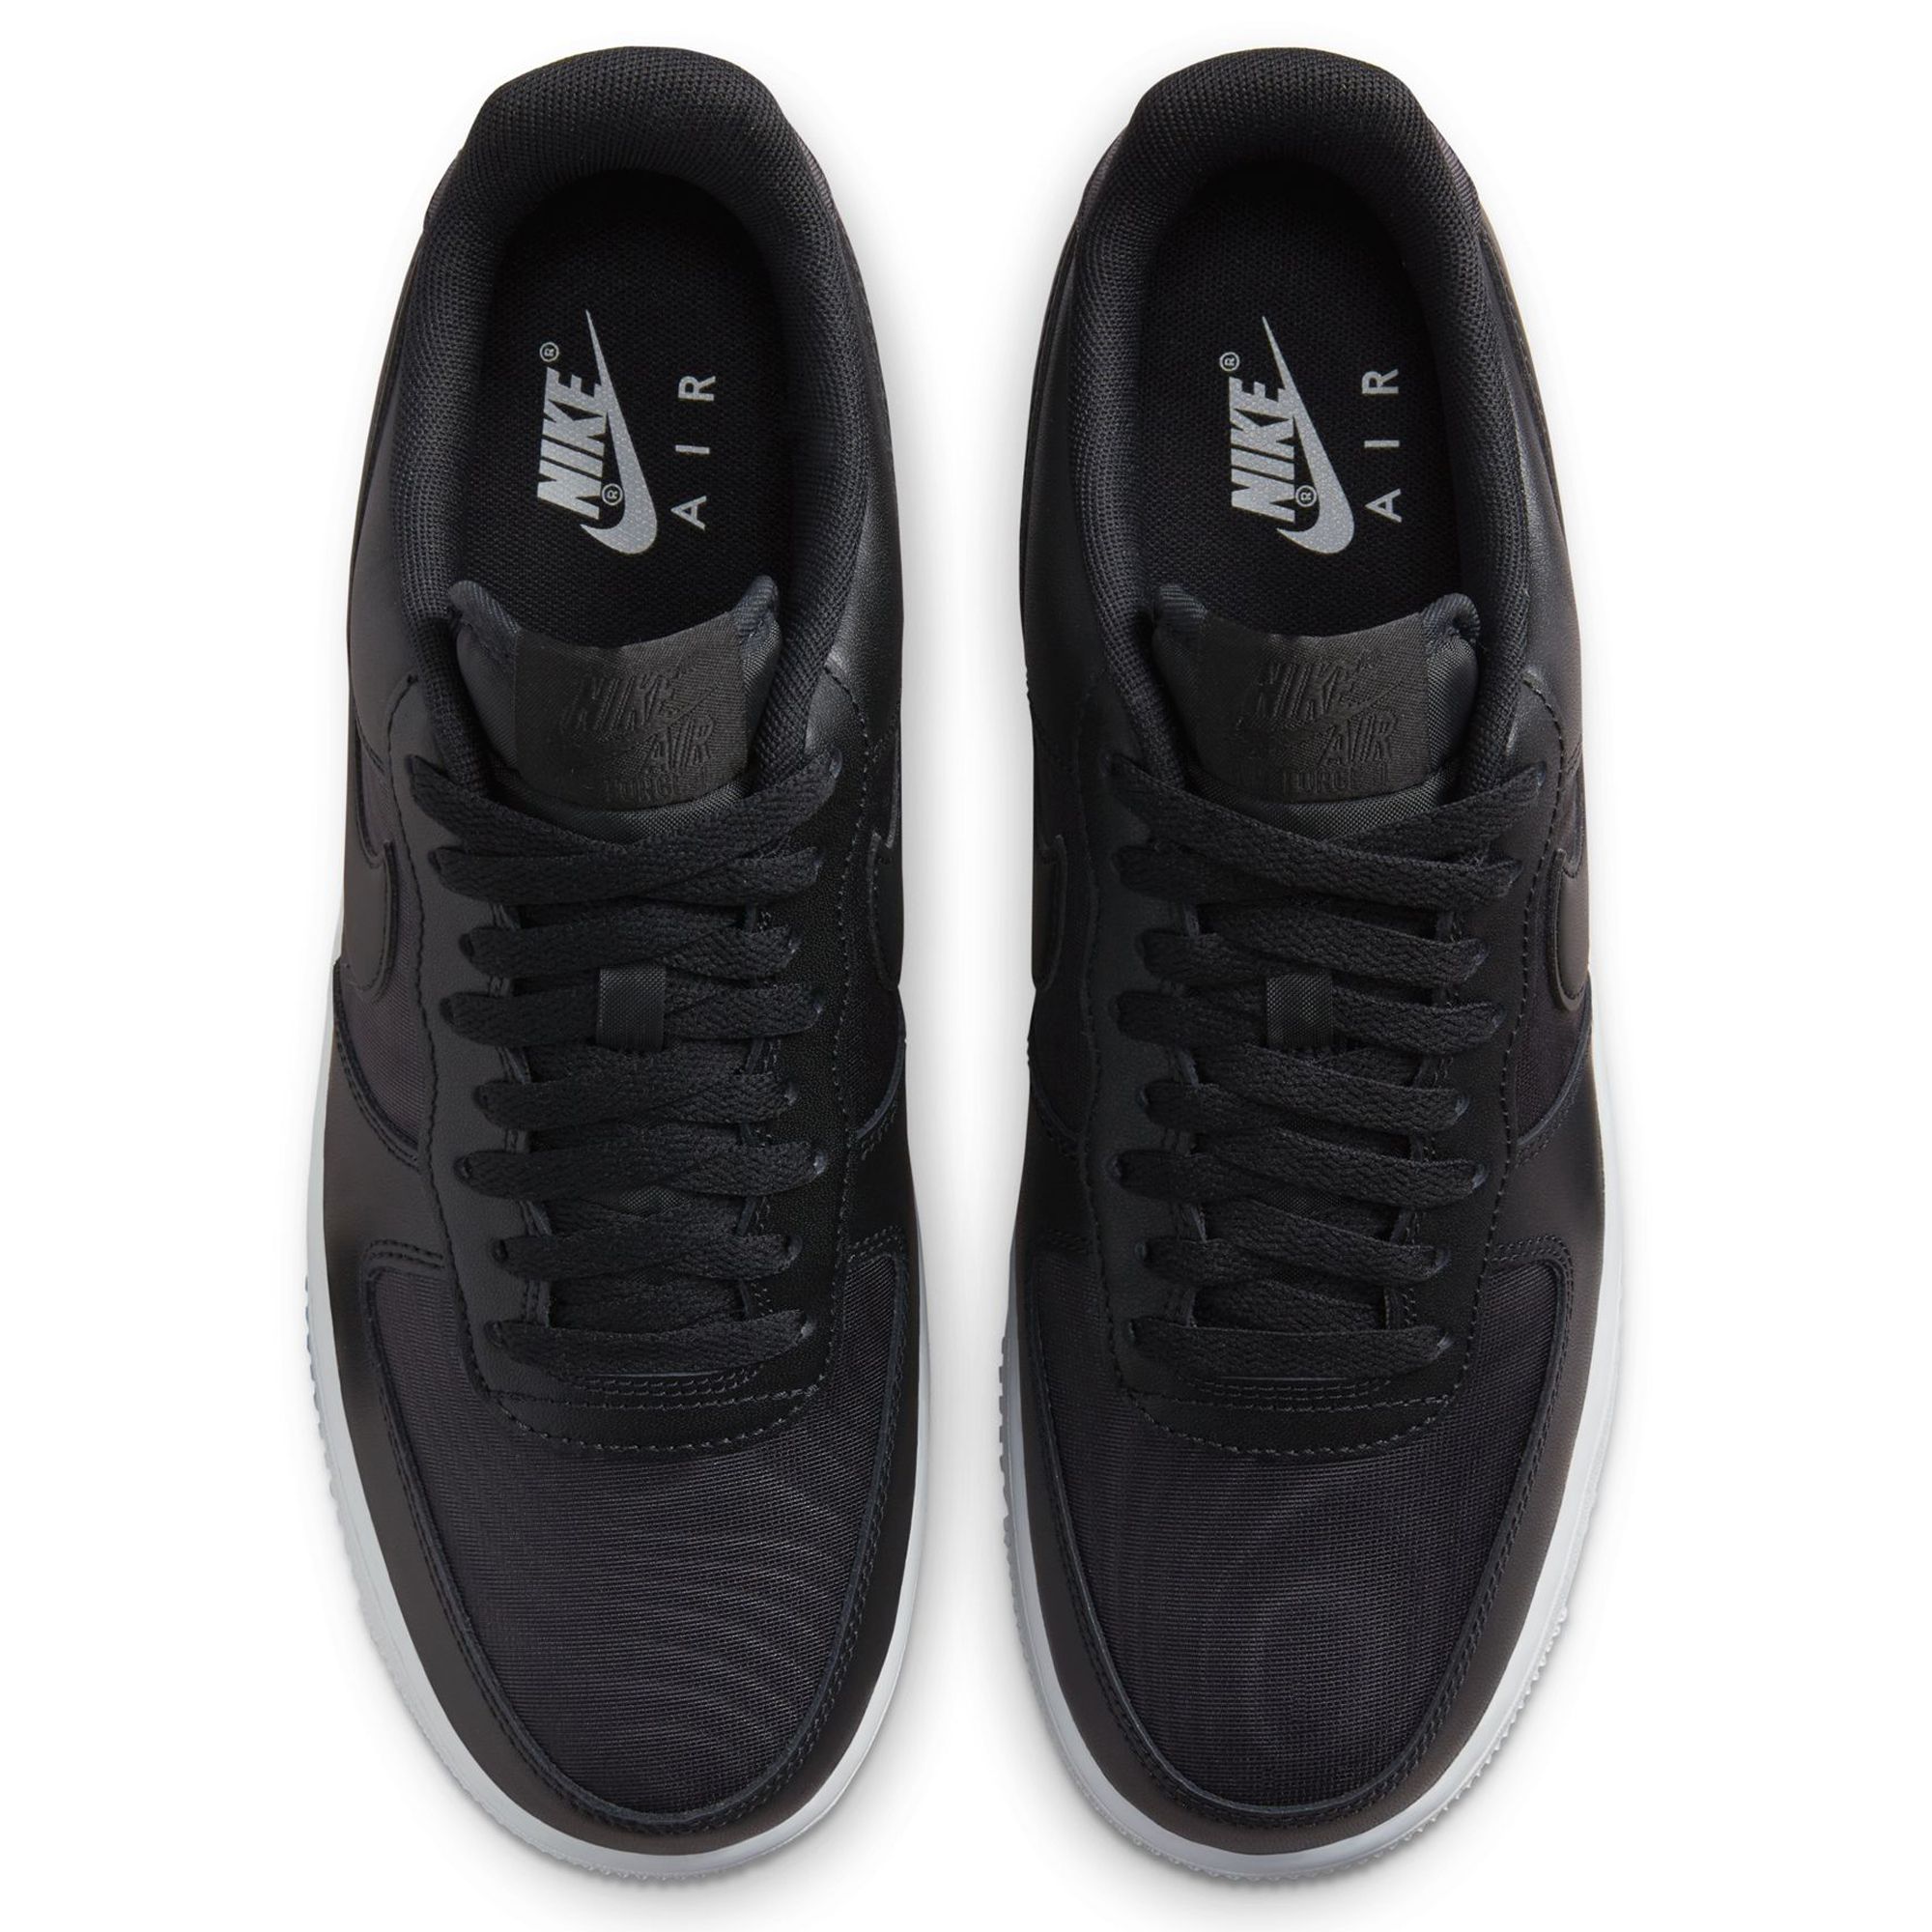 nike air force 1 '07 lv8 men's shoes black/summit white/black